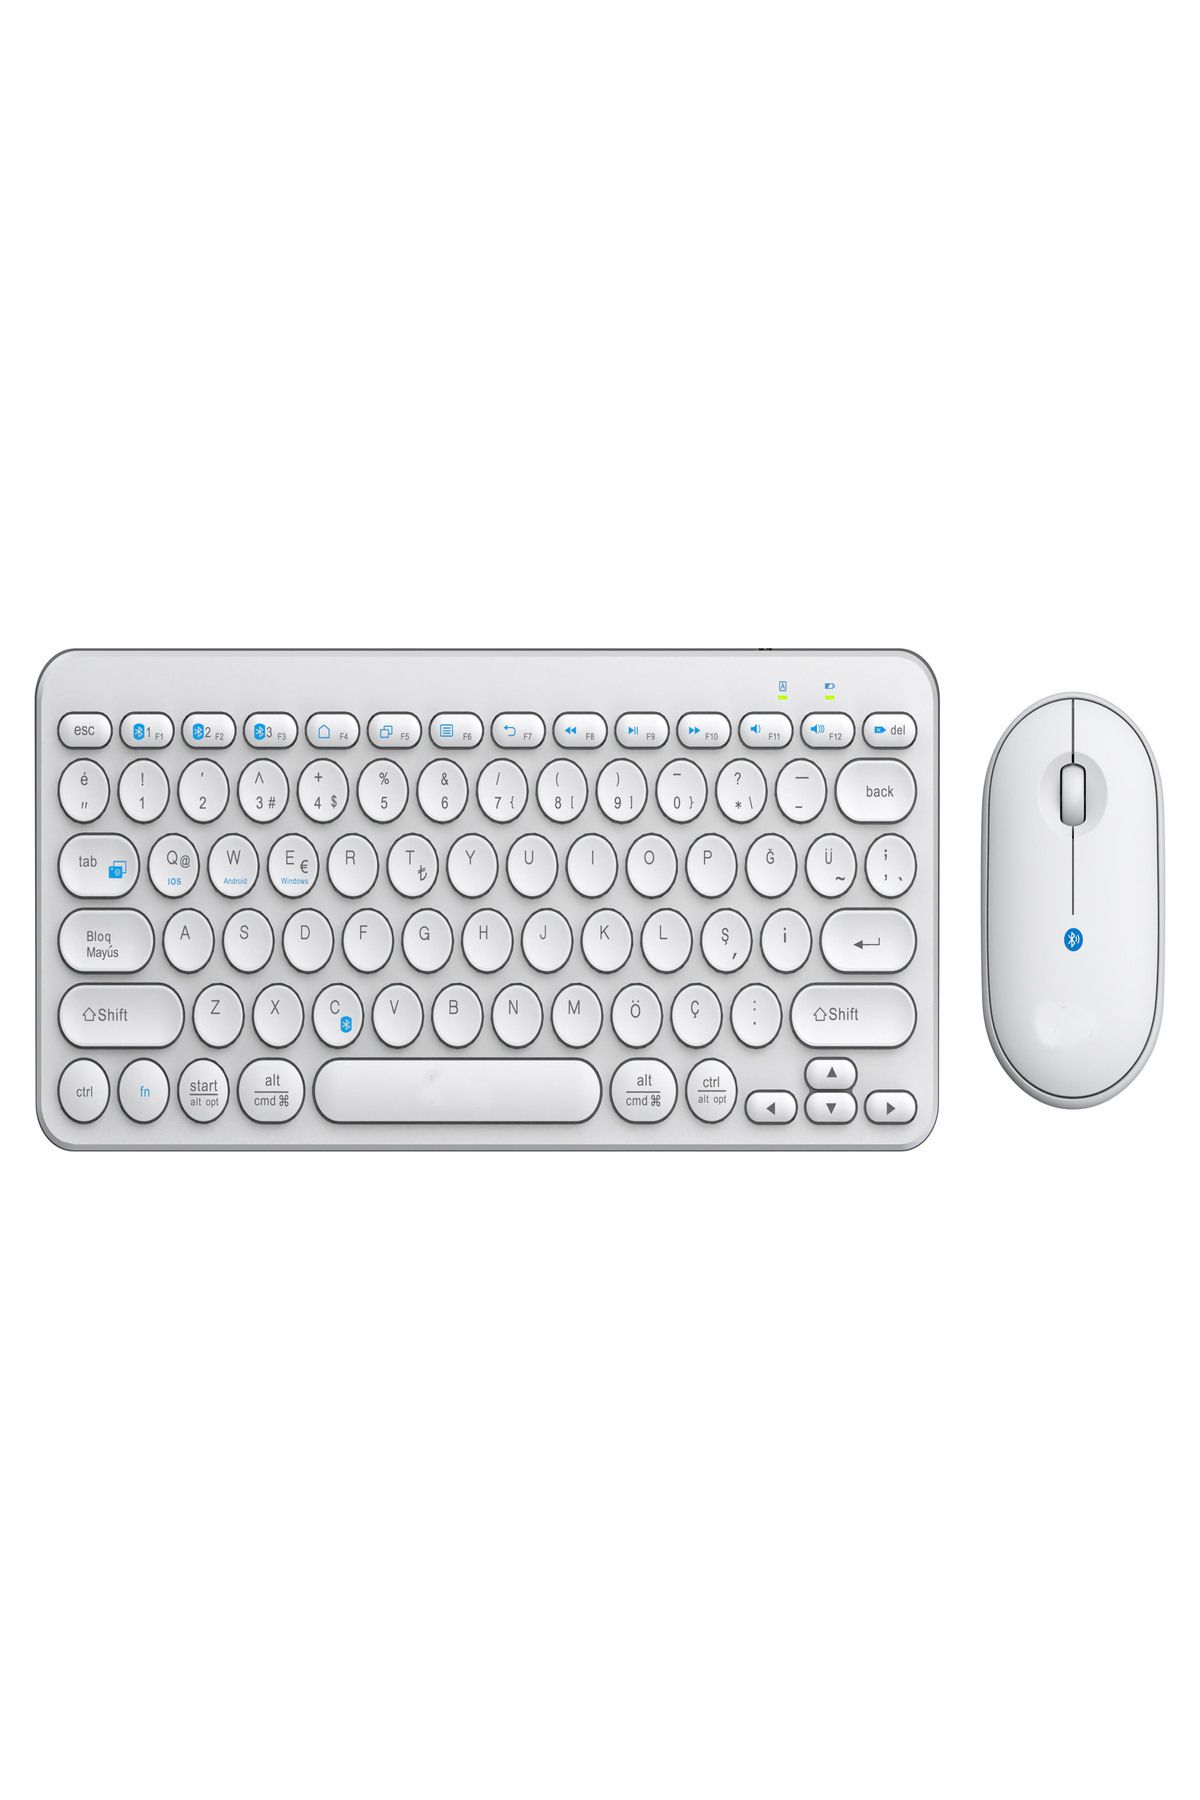 batcell Bluetoothlu Kablosuz Klavye Mouse Seti Türkçe Q Klavye Sessiz